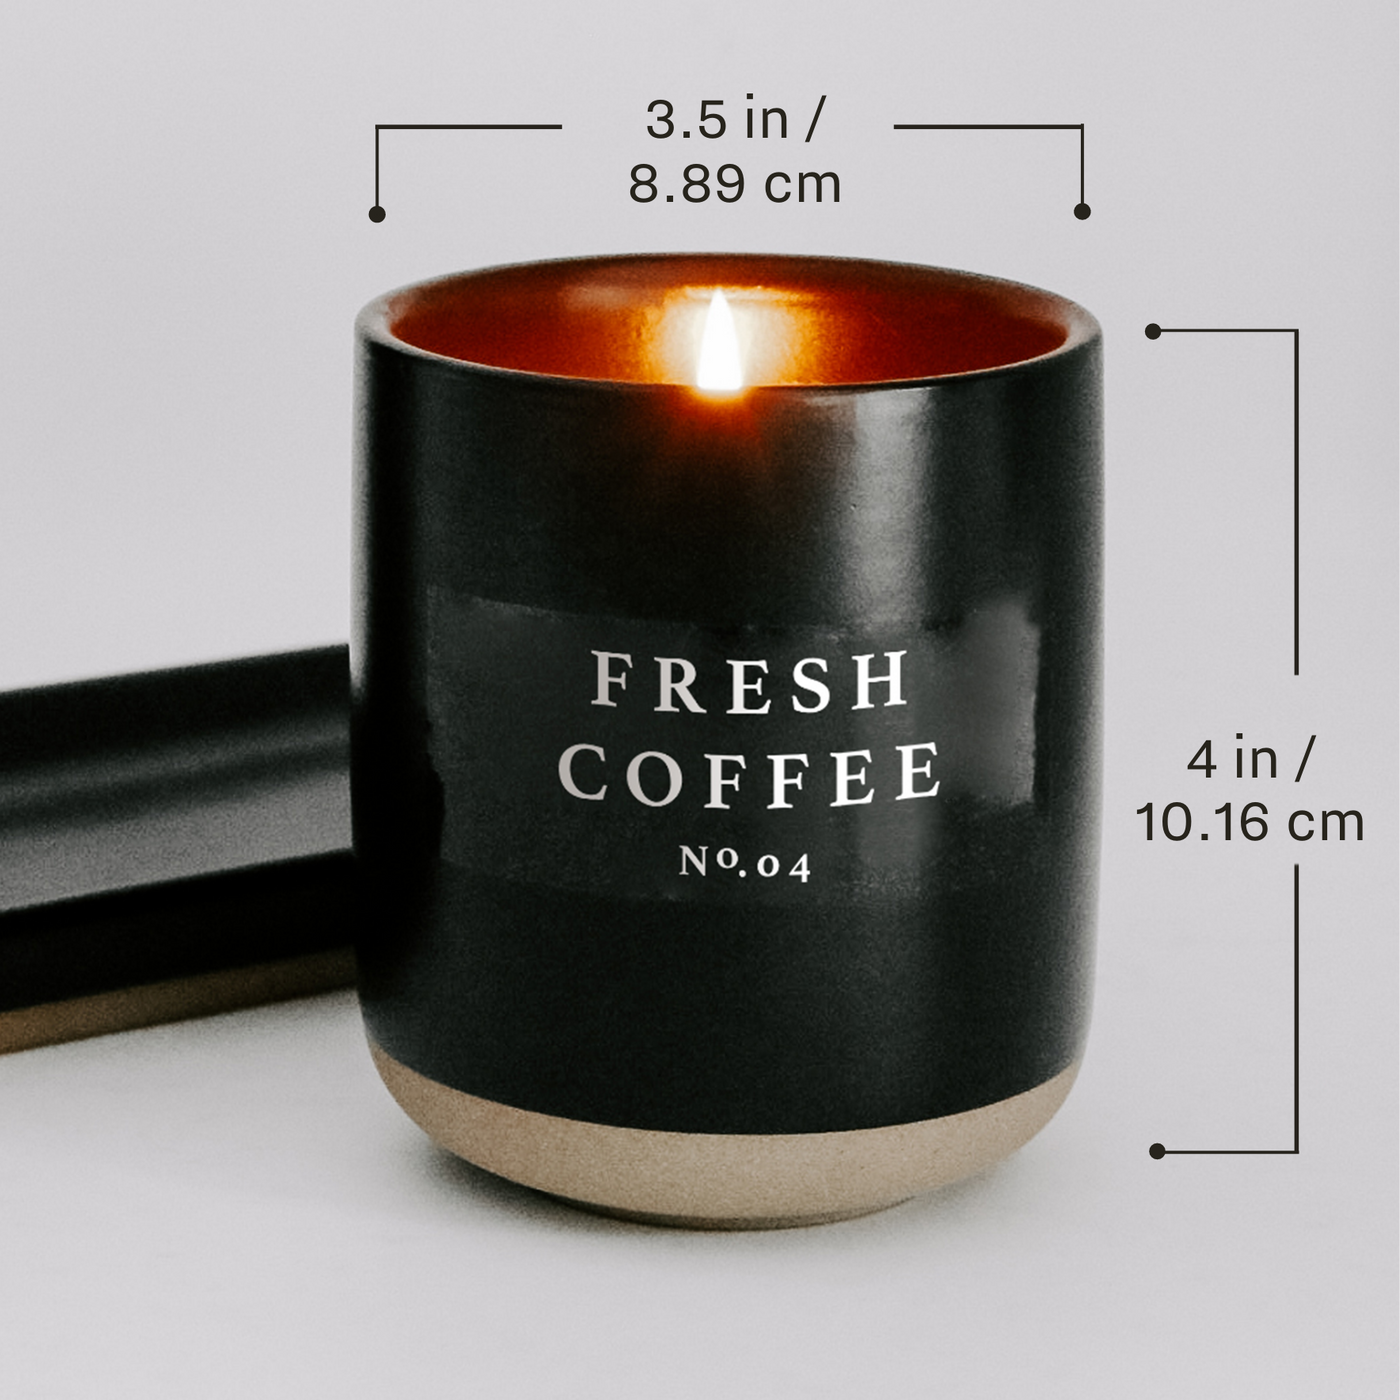 Farmhouse Soy Candle - Black Stoneware Jar - 12 oz